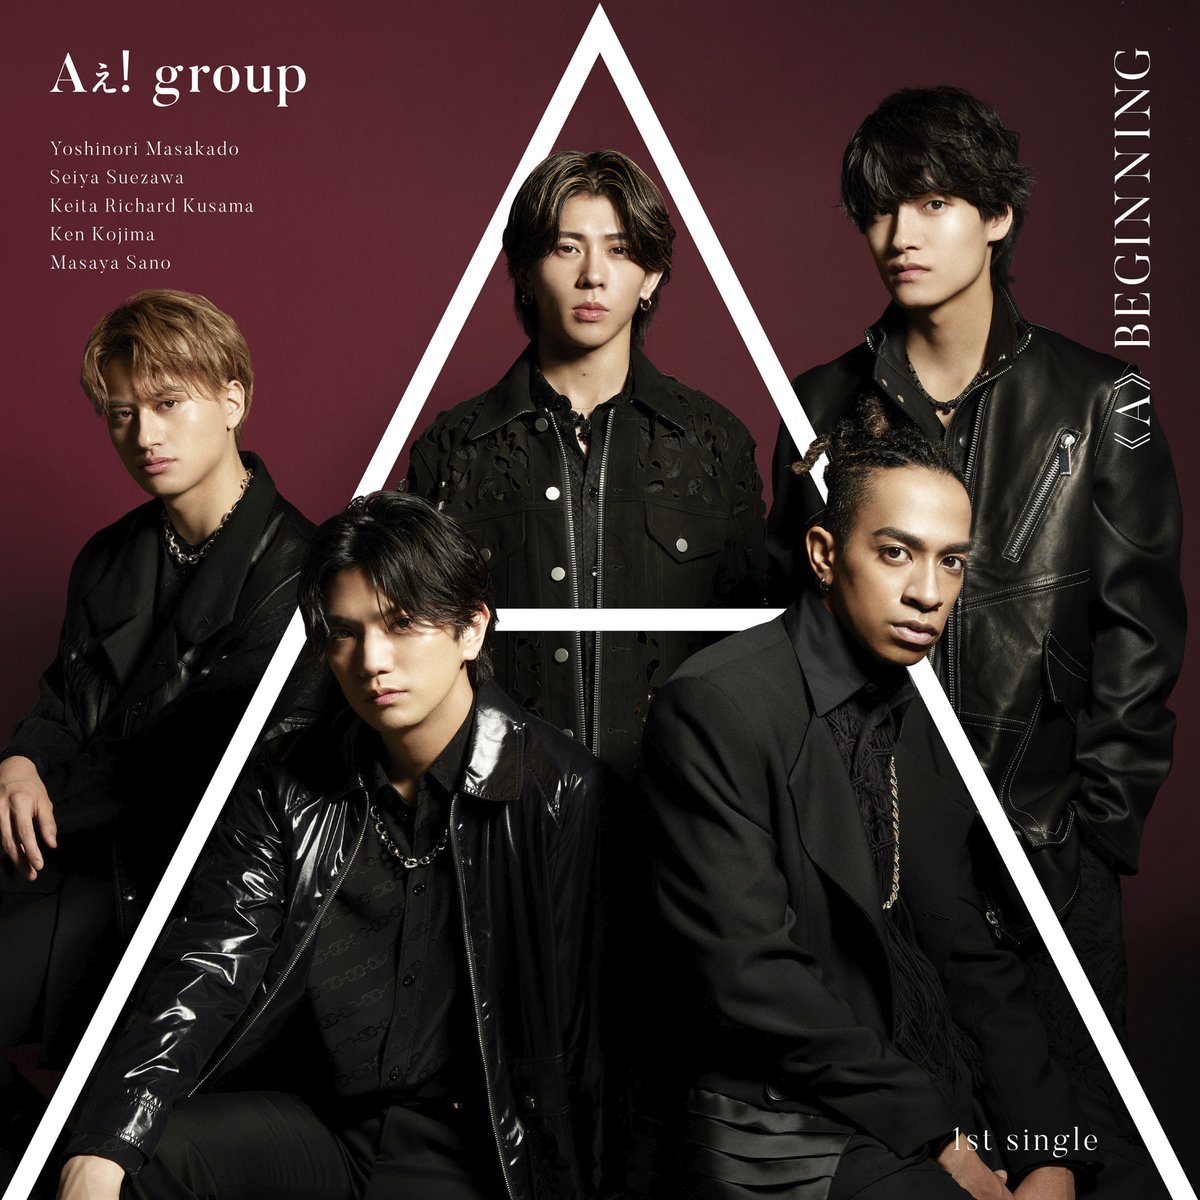 「J-POPシングル ウィークリーTOP30」発表、Aぇ! group『《A》BEGINNING』が1位を獲得！

tower.jp/article/news/2…

#Aぇǃgroup
#A_BEGINNING
#タワレコオンラインニュース